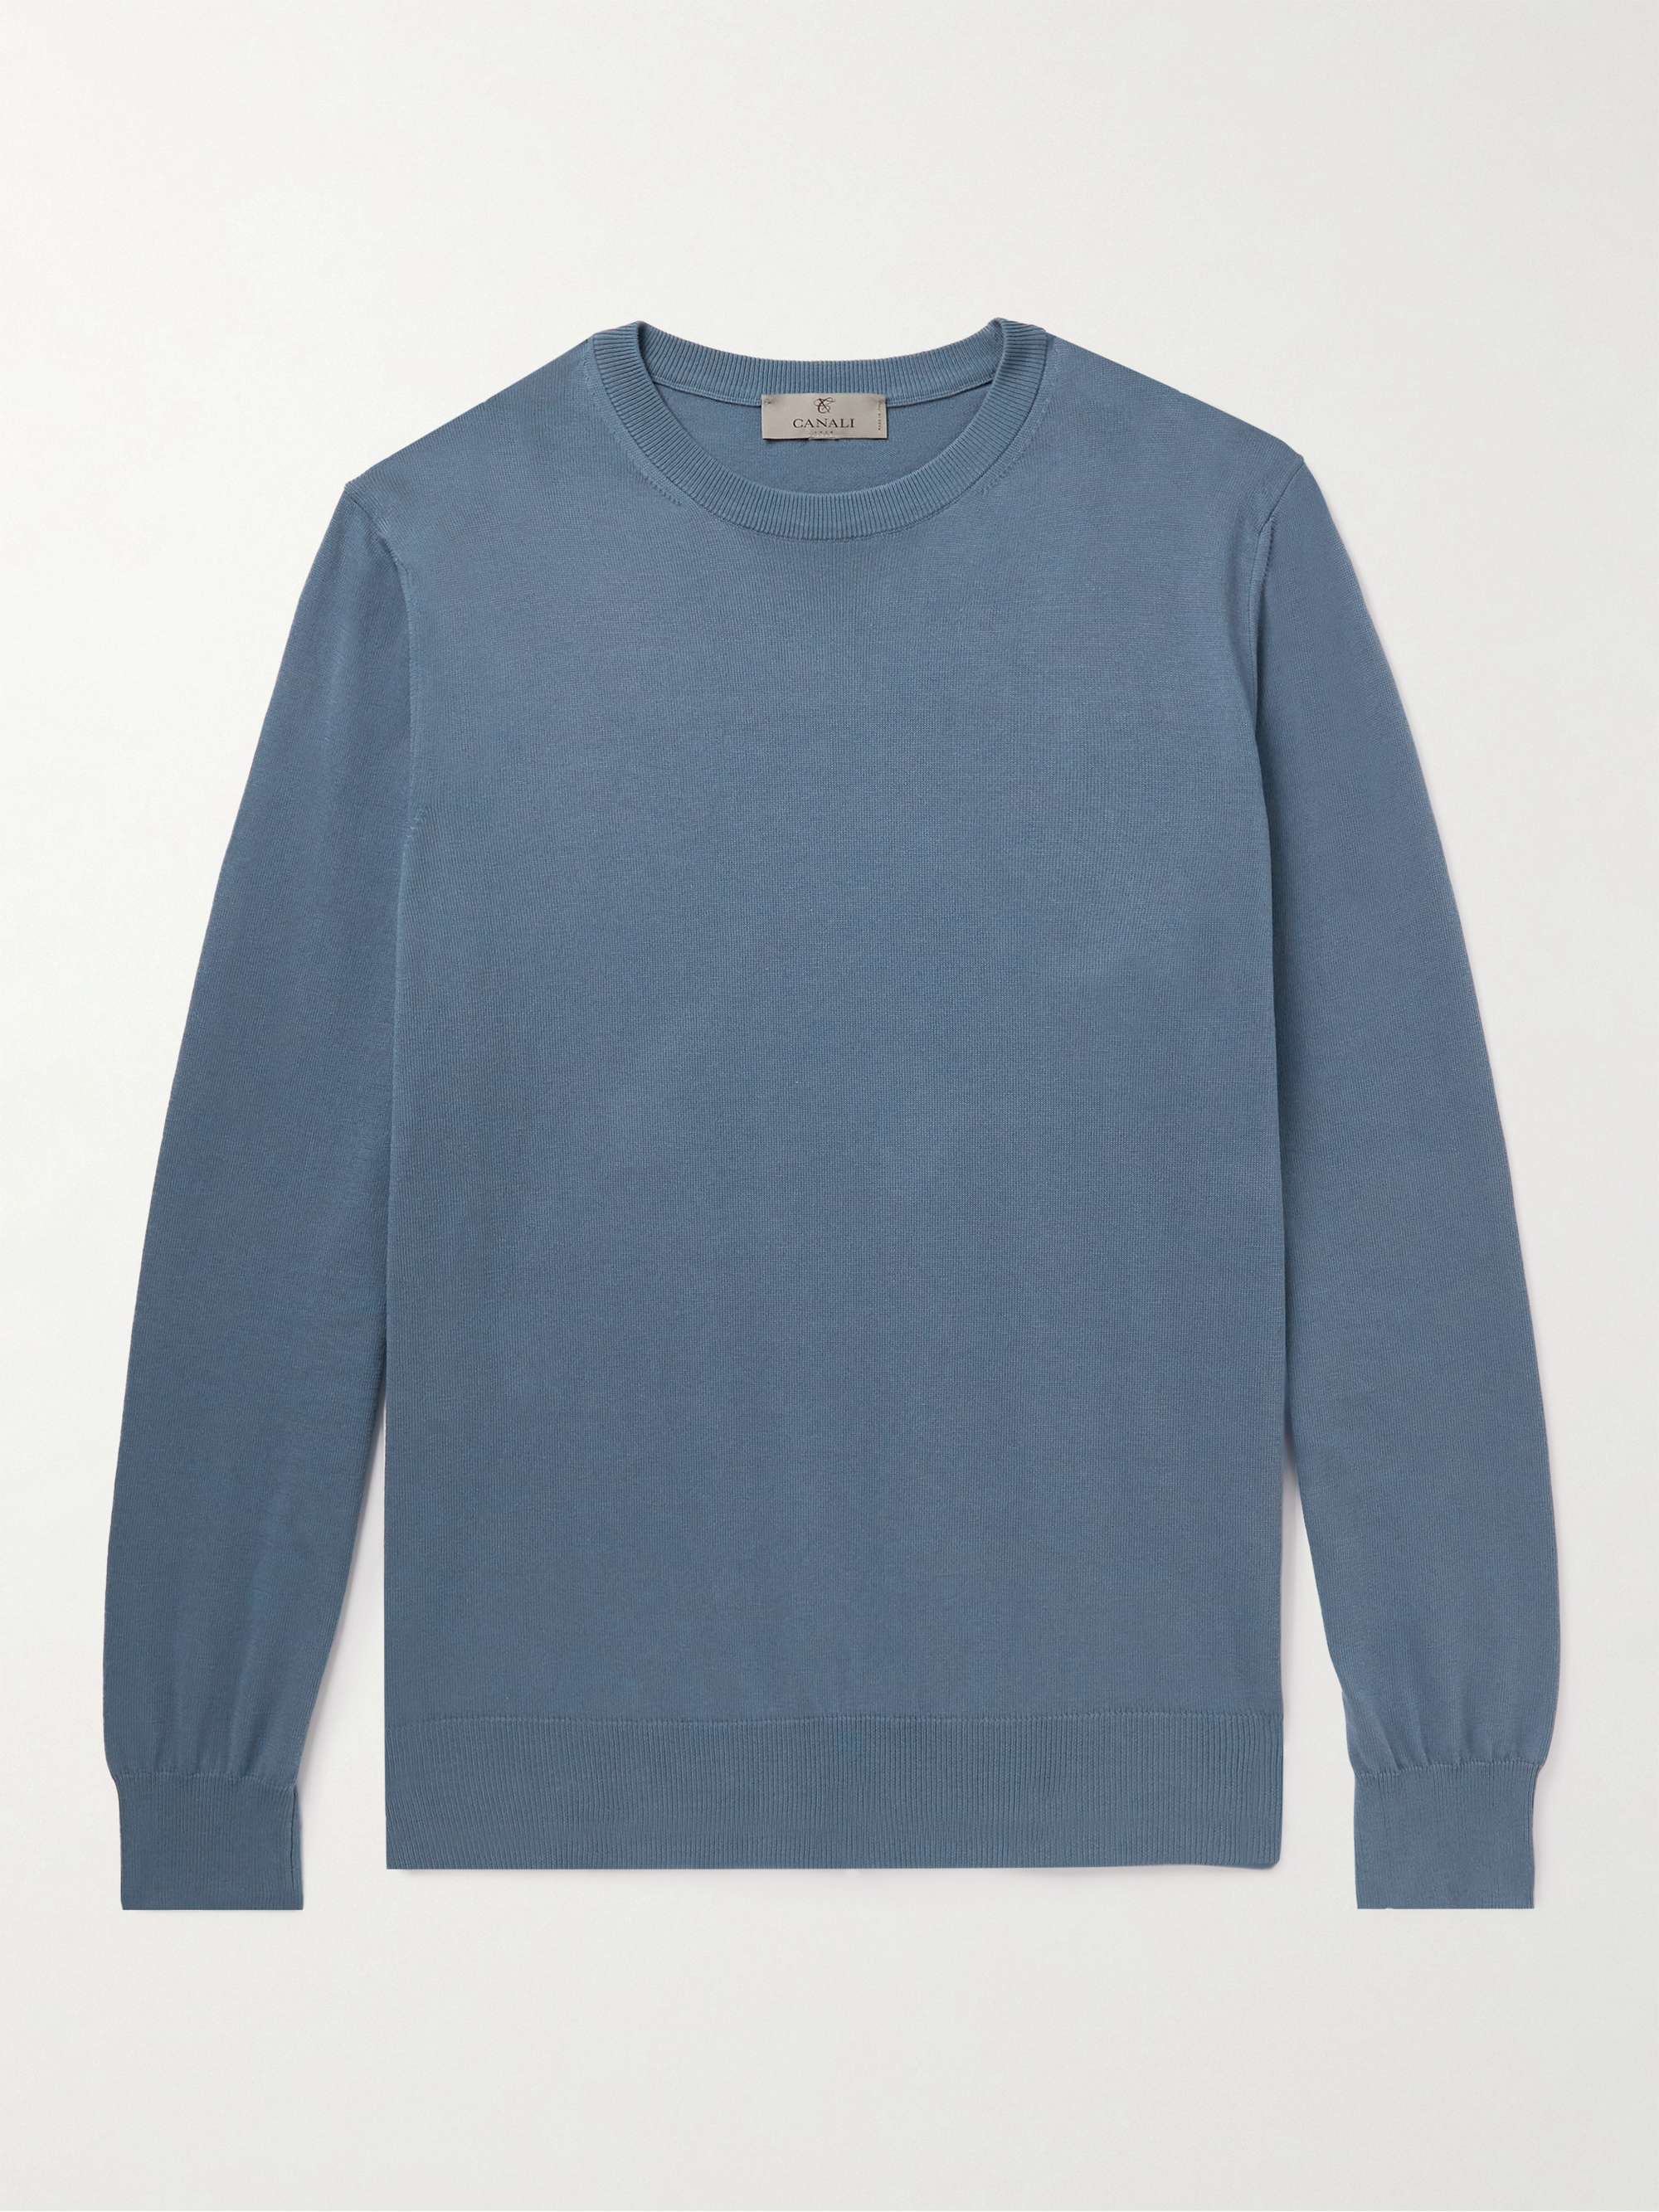 CANALI Slim-Fit Cotton Sweater | MR PORTER